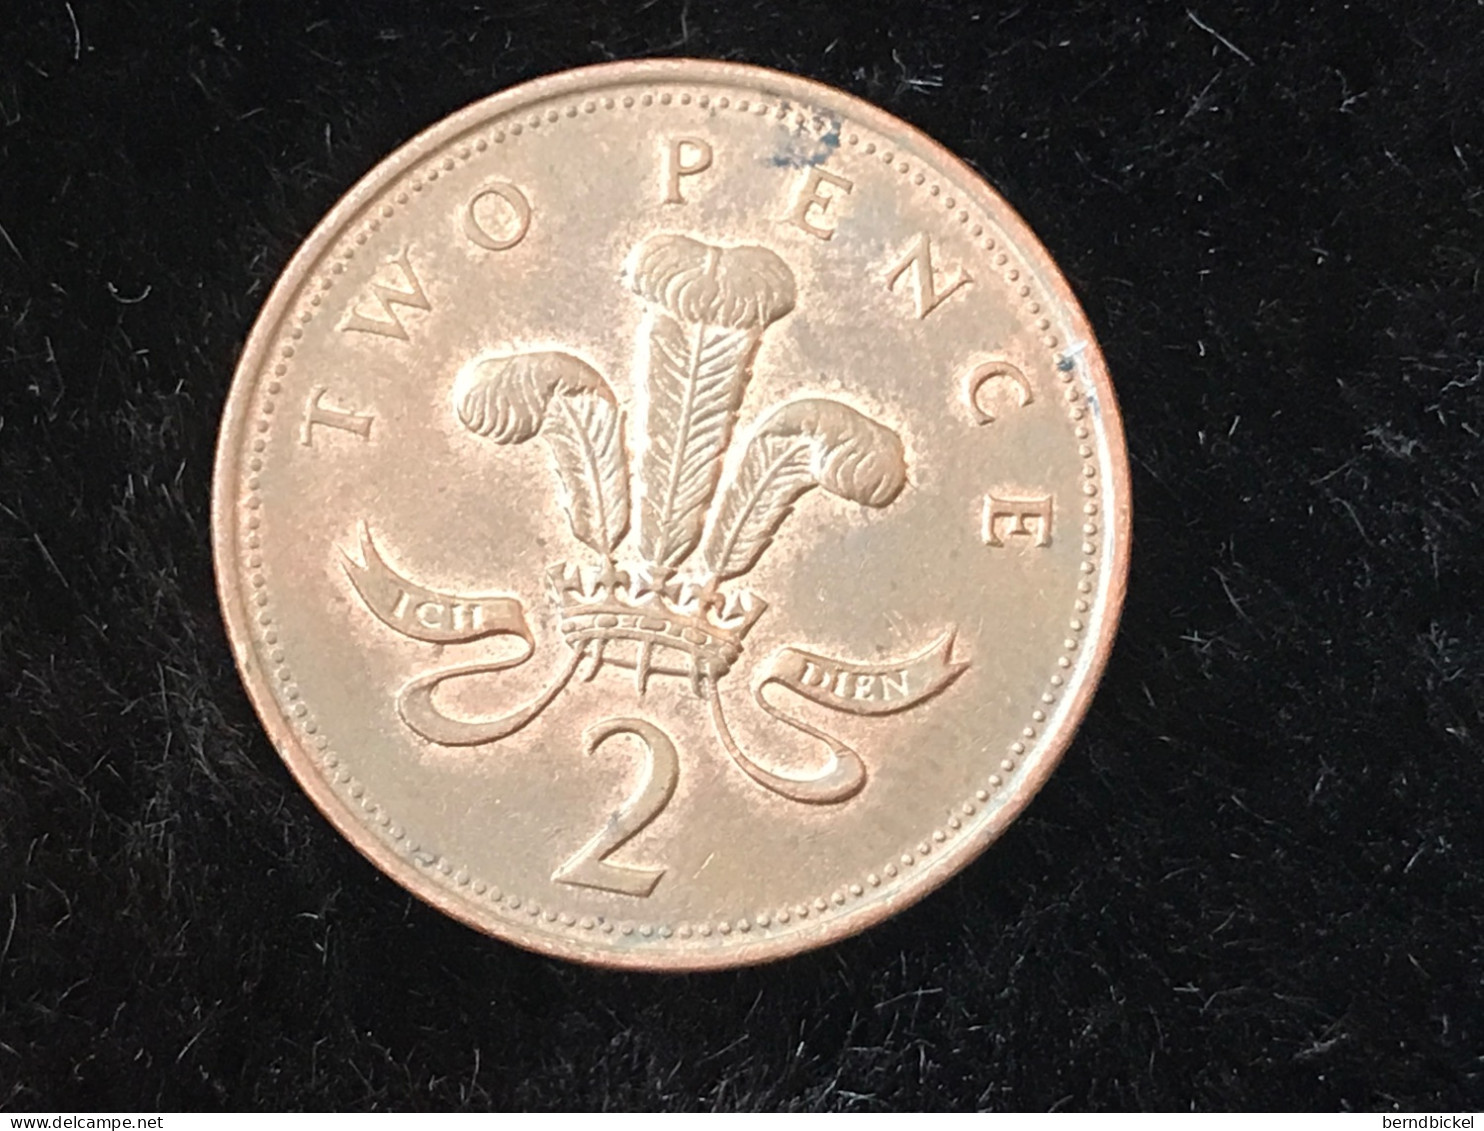 Münze Münzen Umlaufmünze Großbritannien 2 Pence 1995 - 2 Pence & 2 New Pence